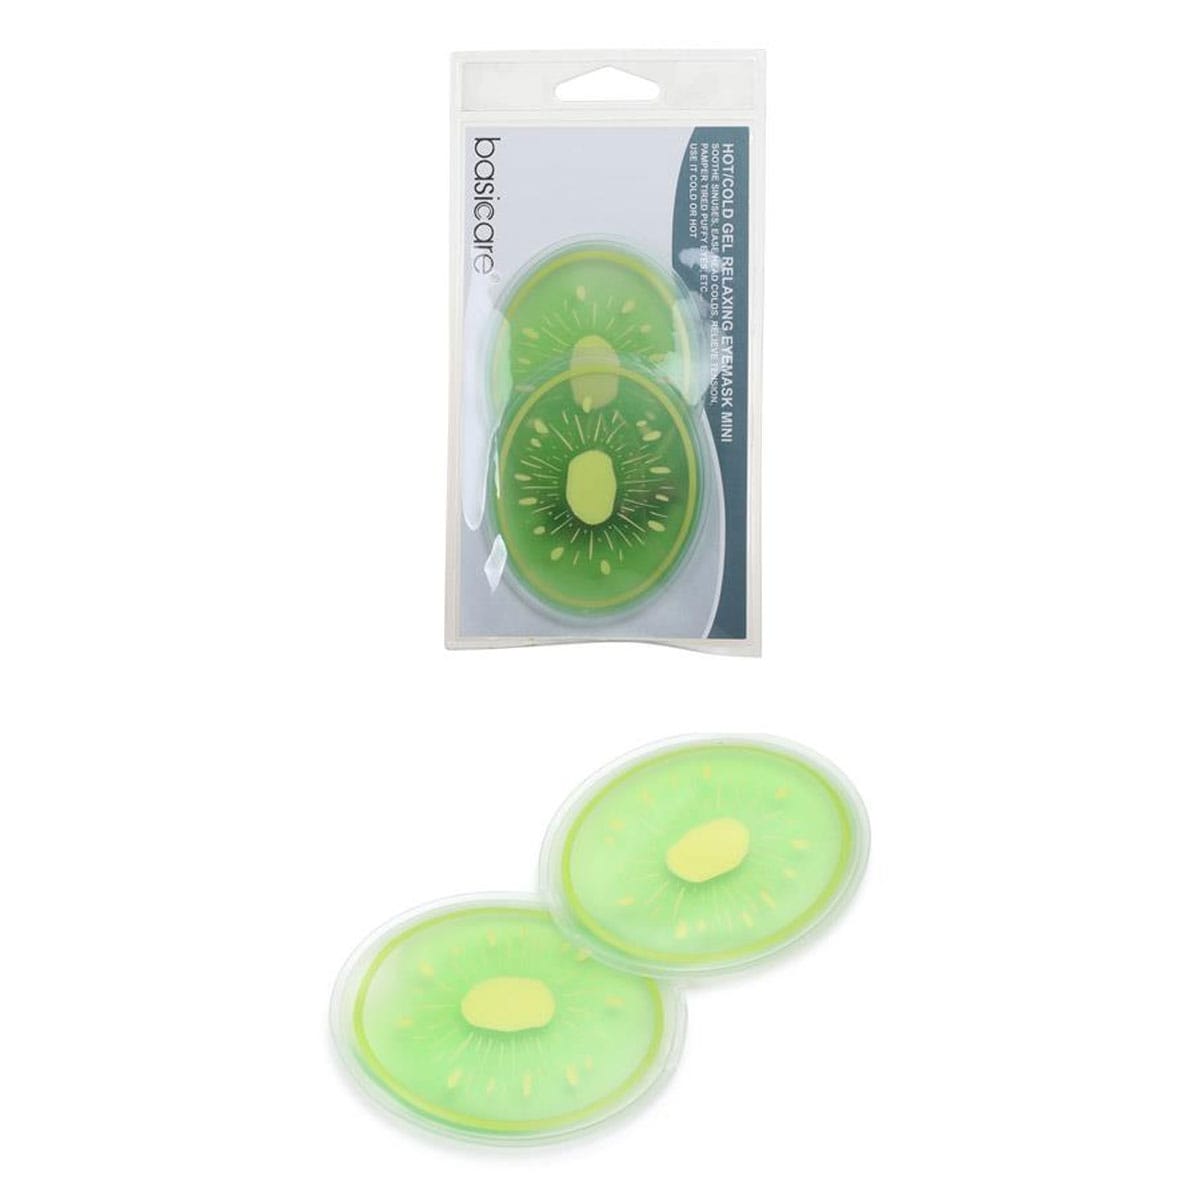 Basicare Cucumber Treatment Gel Eye Mask 2 Pack